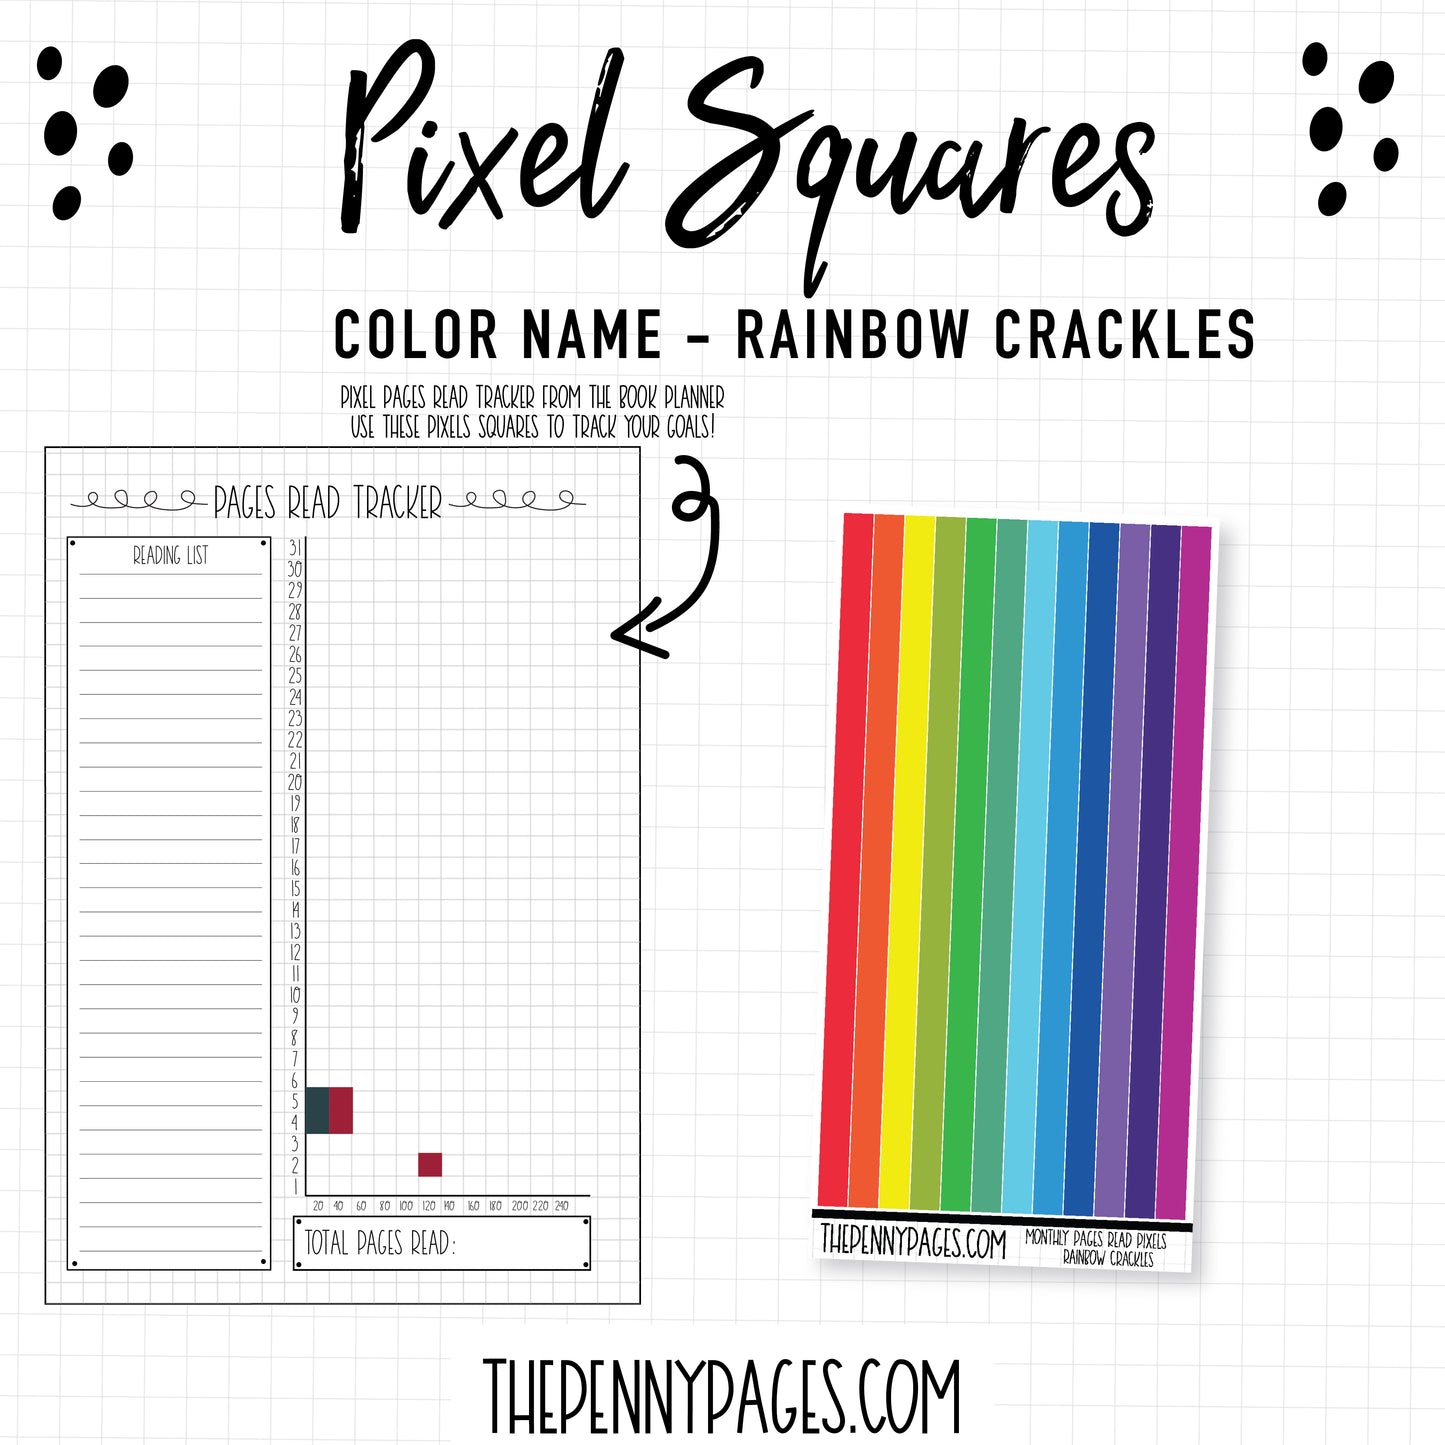 Pixel squares - Rainbow Crackles